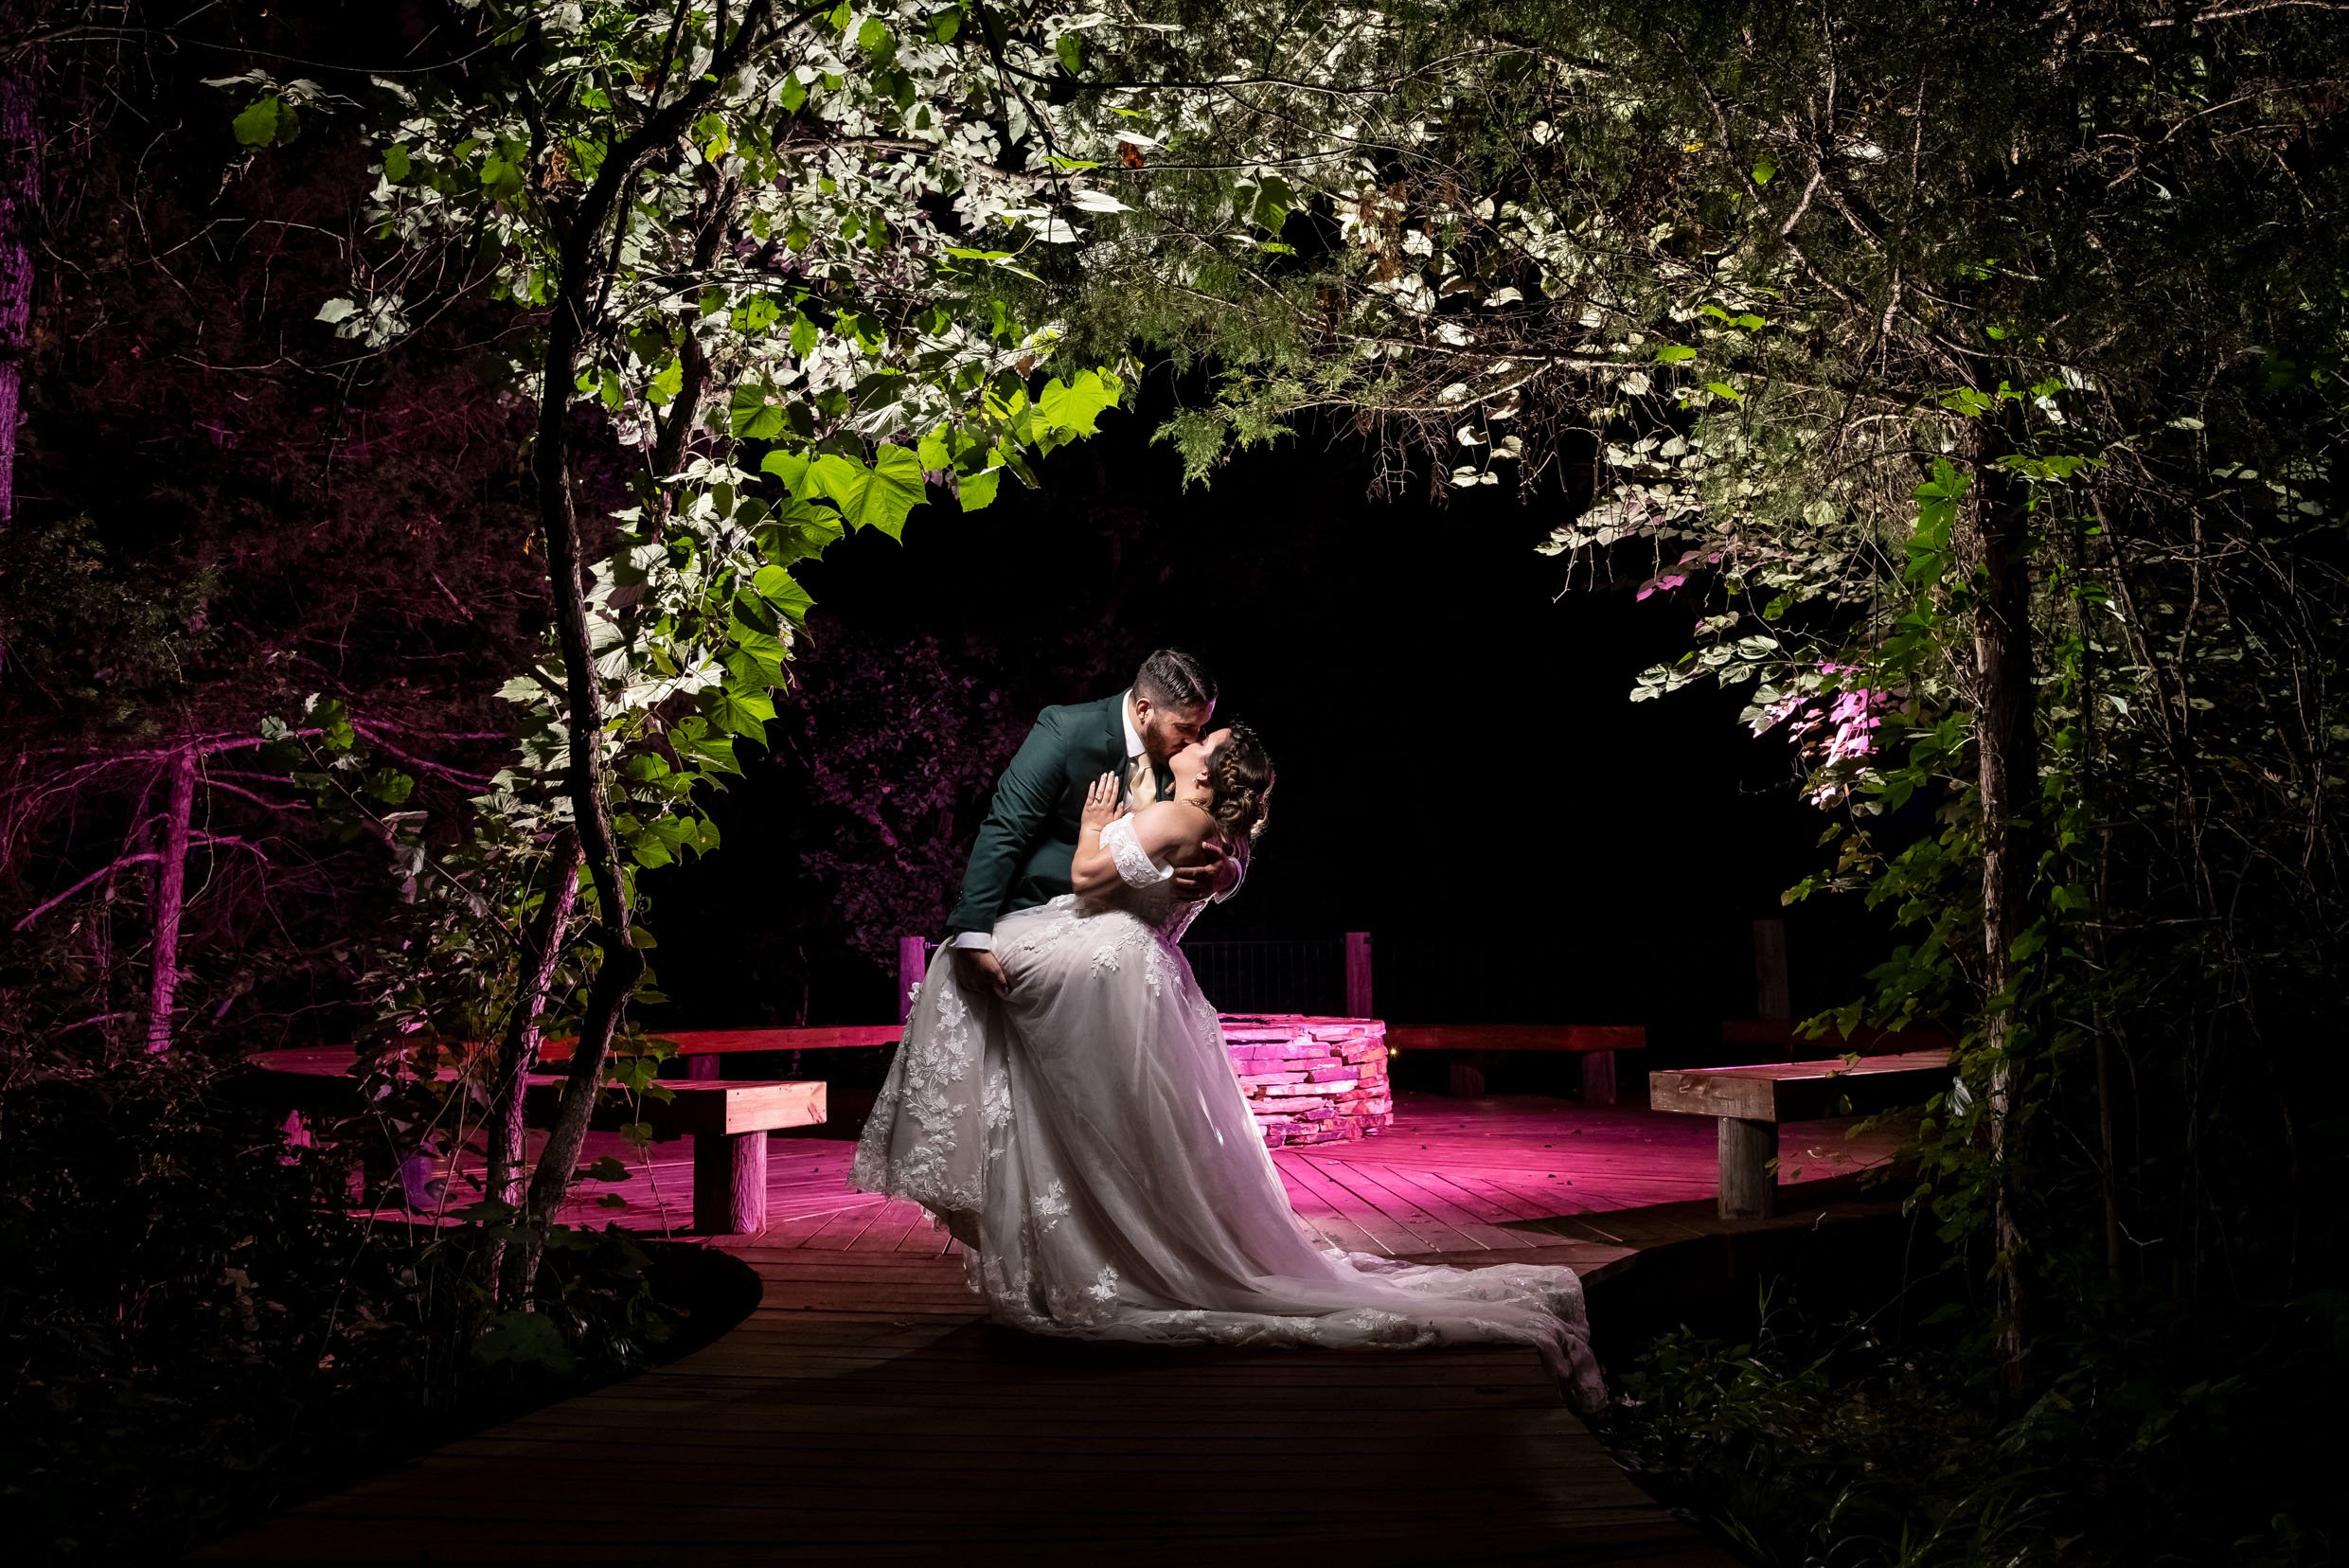 wedding-photographer-photography-okc-edmond-oklahoma-city-beautiful-bride-groom-night-portrait-dip-trees-pink-chadandbriephotography.jpg